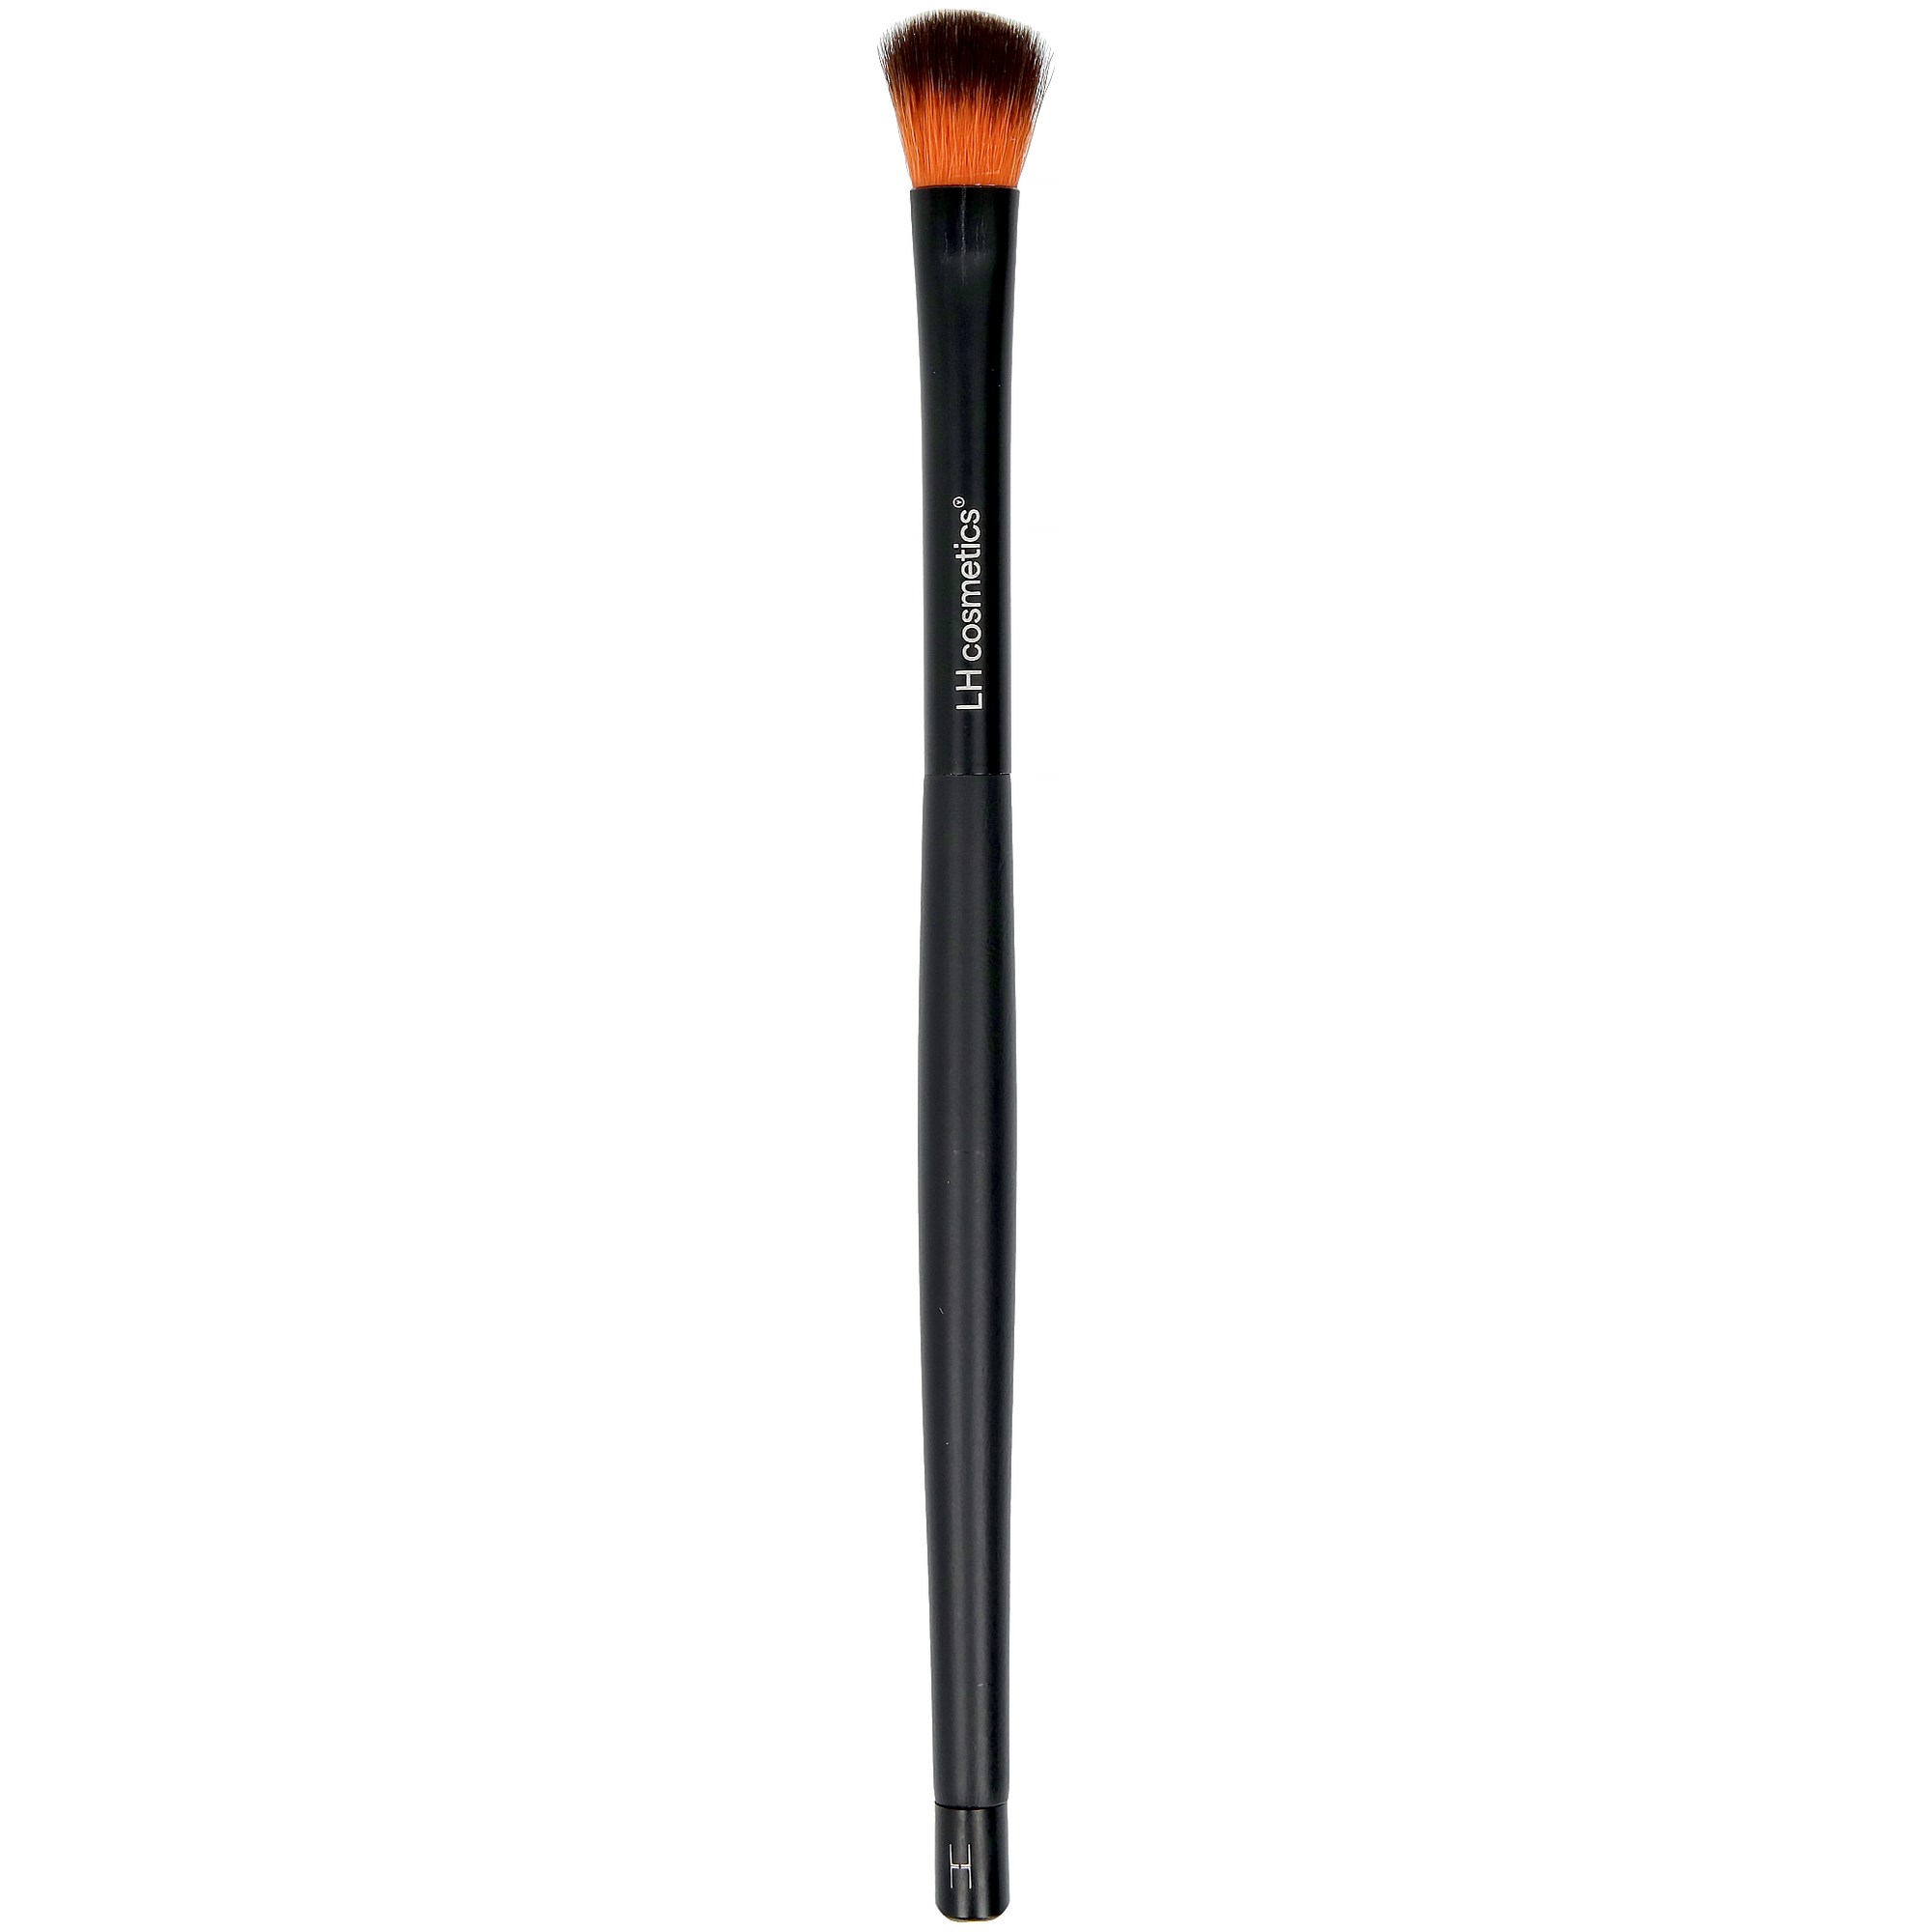 LH cosmetics Brushes & Tools Blending Brush